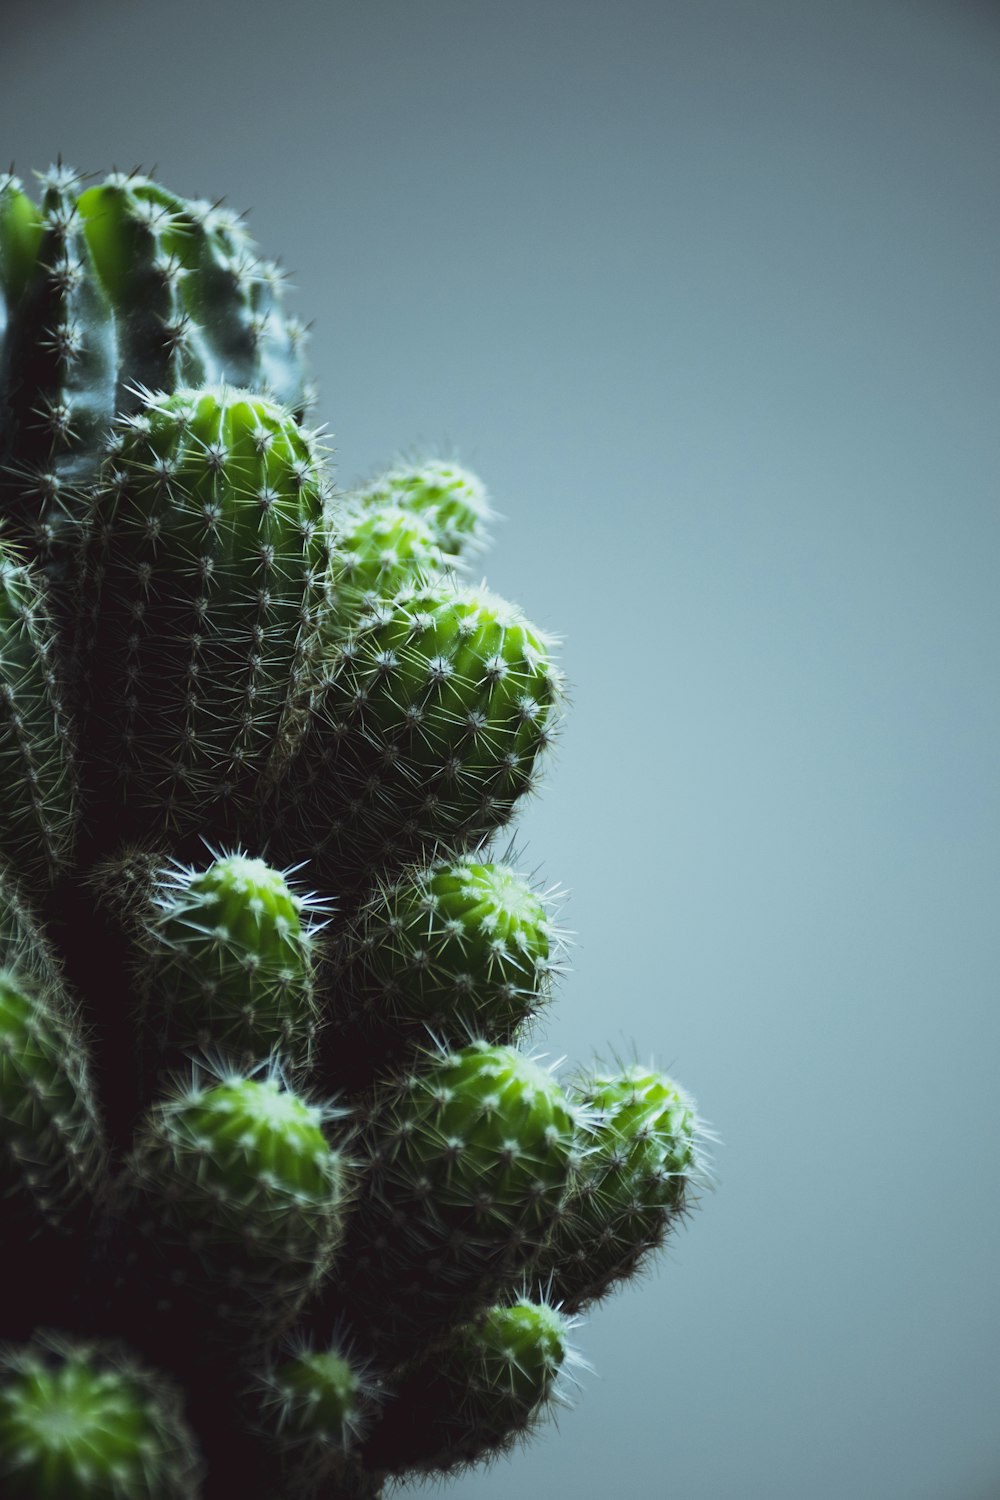 a close-up of a cactus